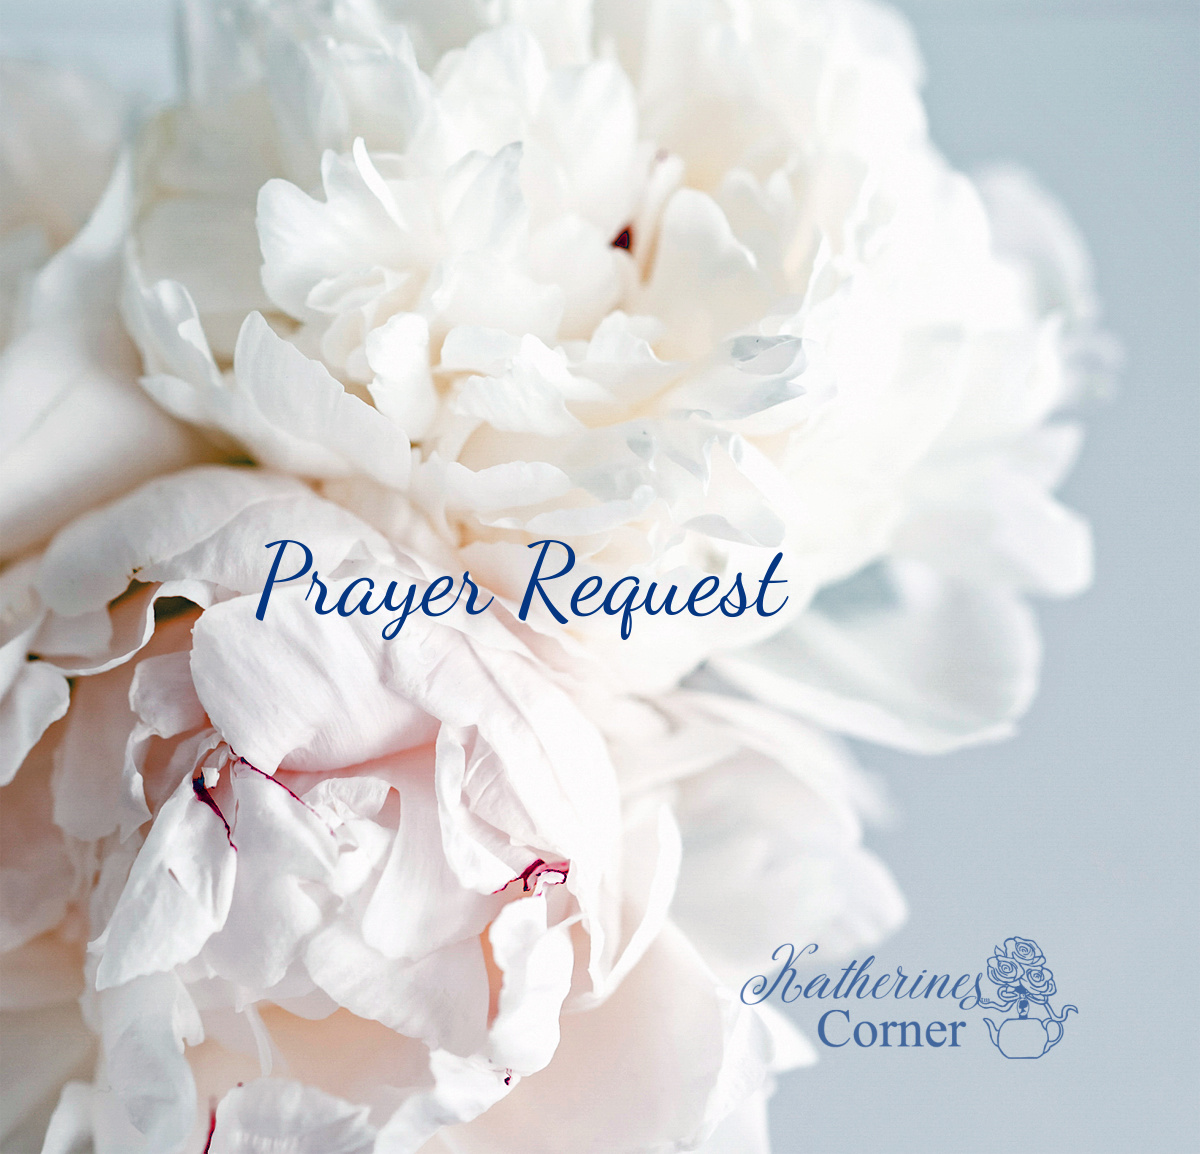 A Prayer Request